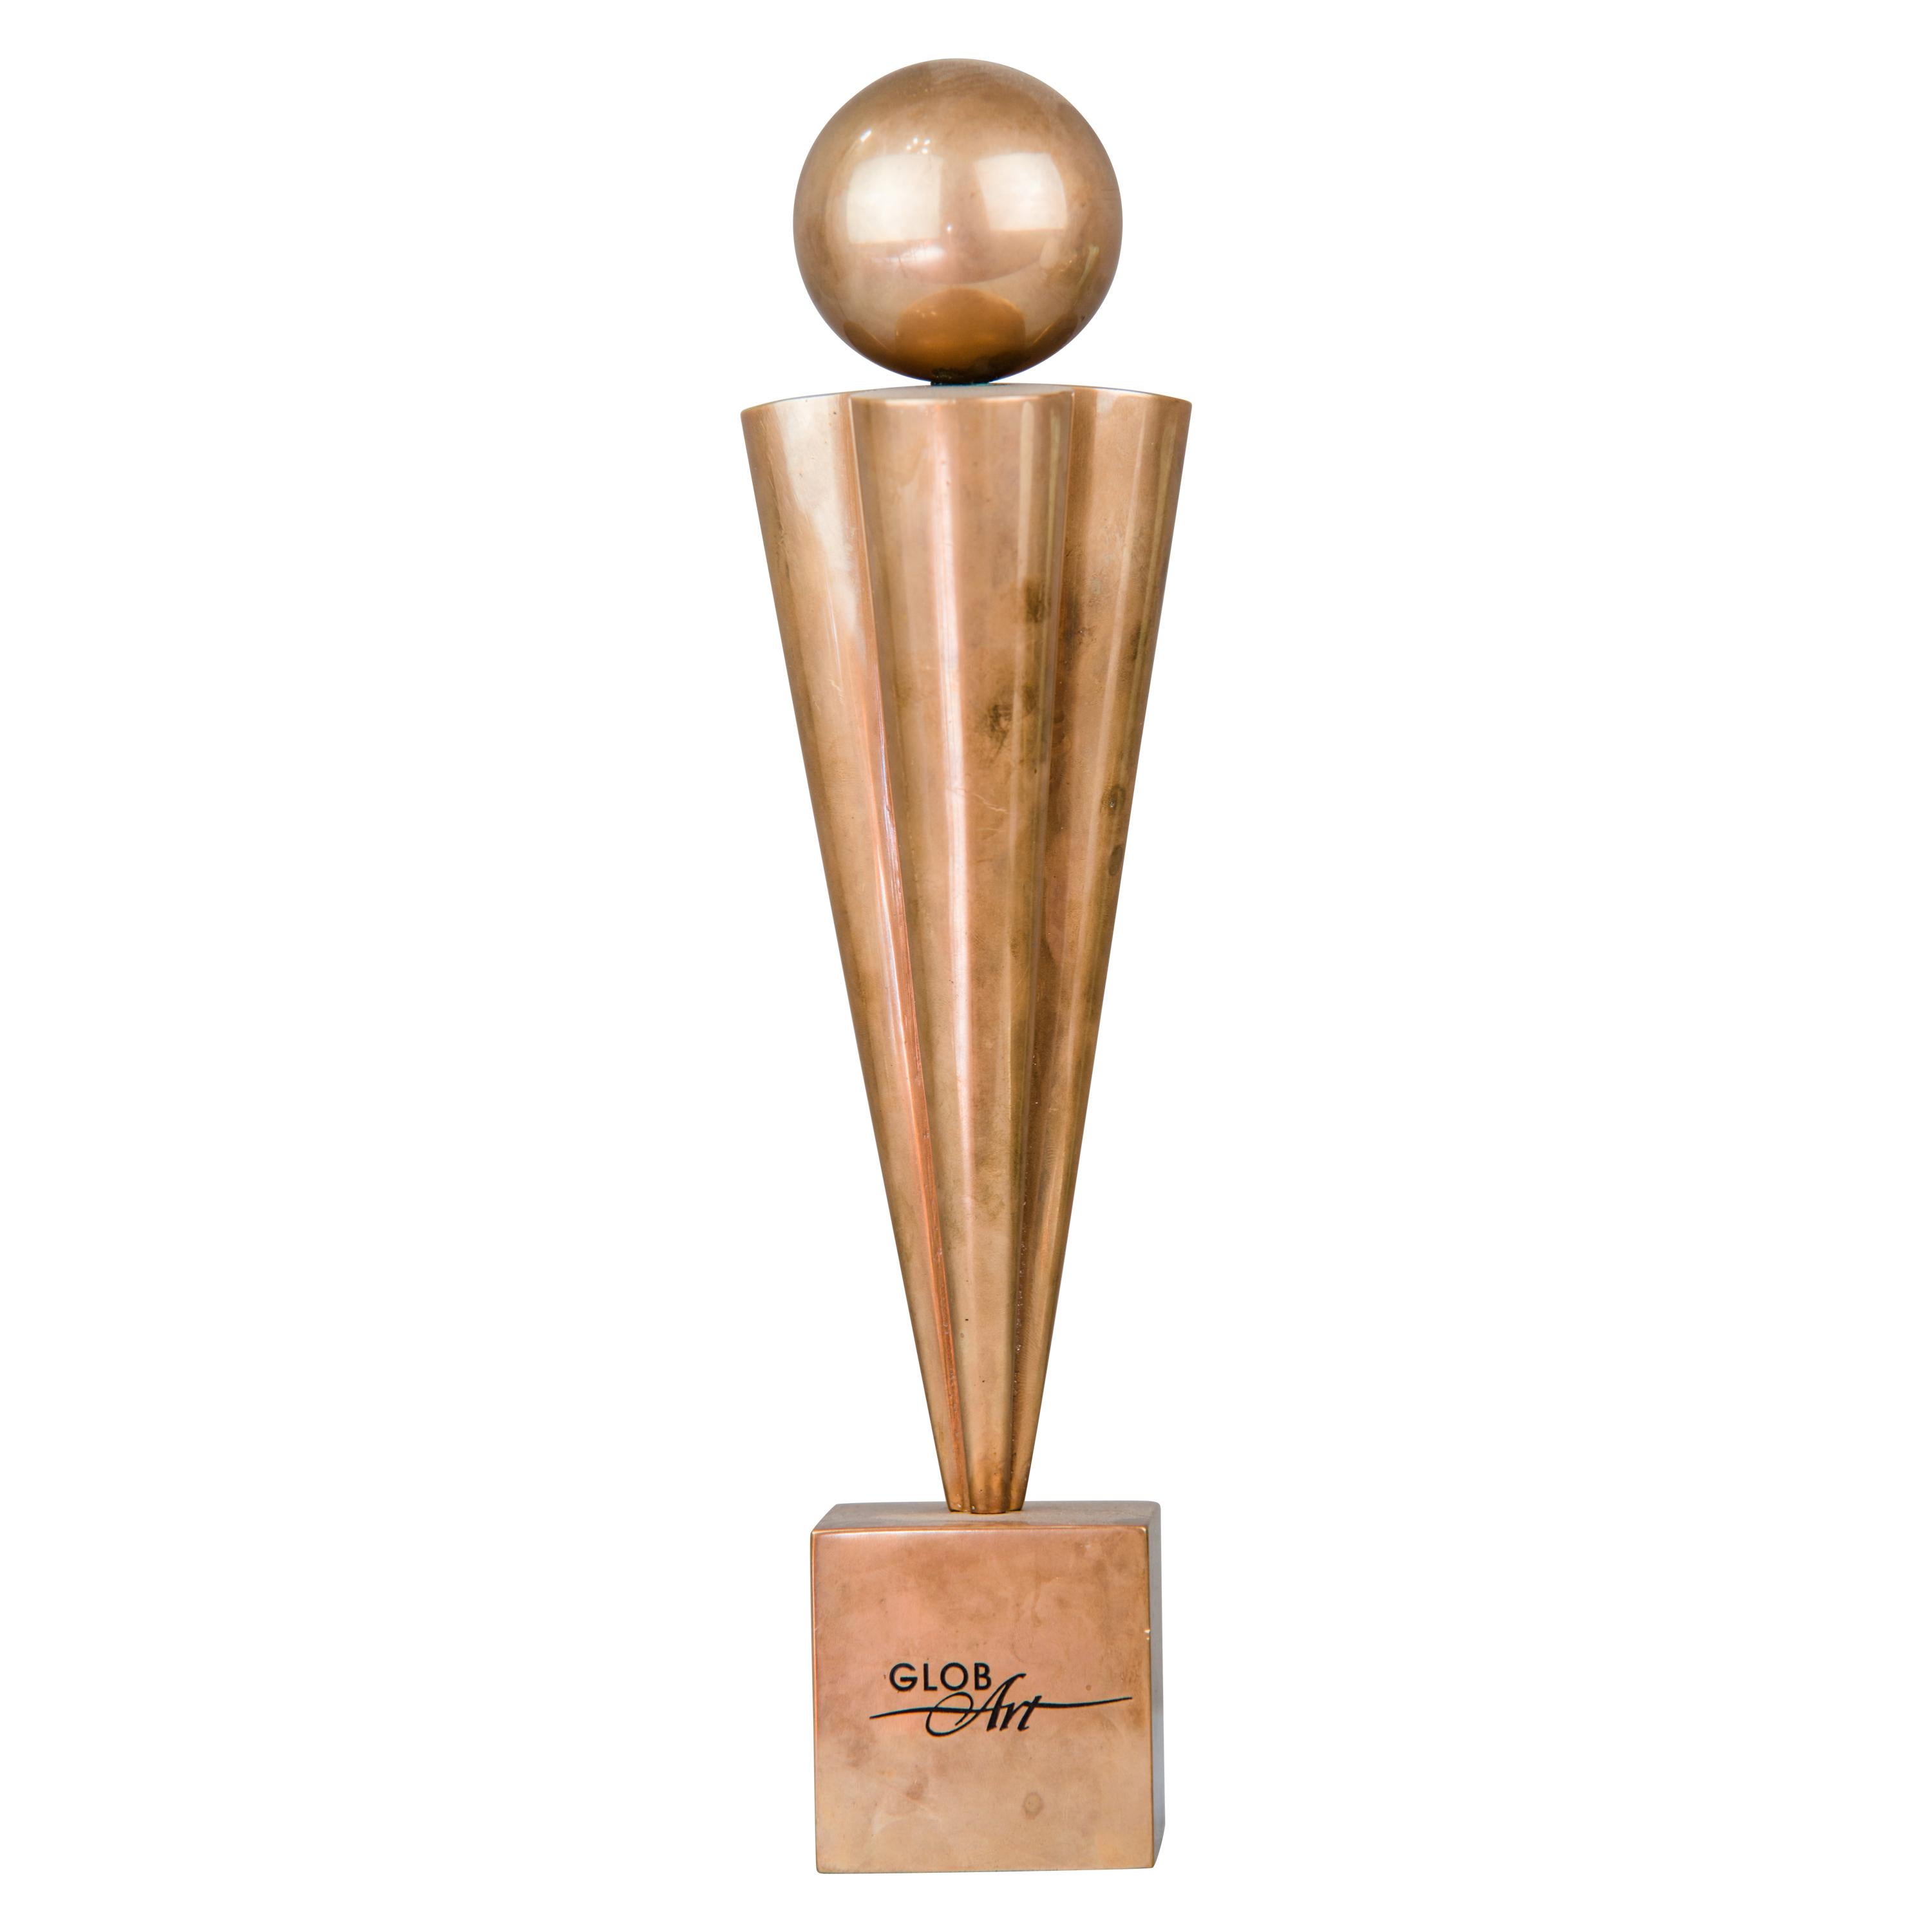 Original Globart Trophy, circa 1998